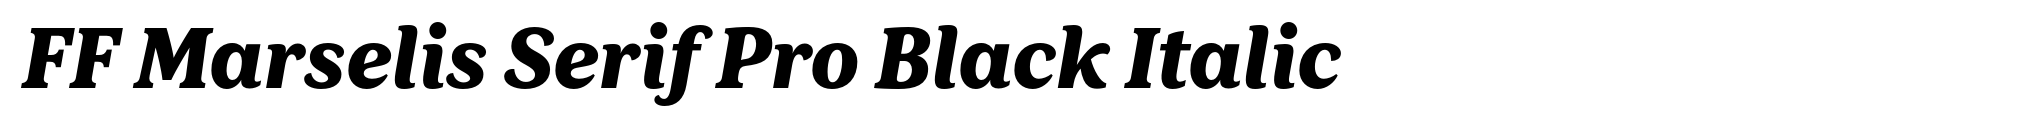 FF Marselis Serif Pro Black Italic image